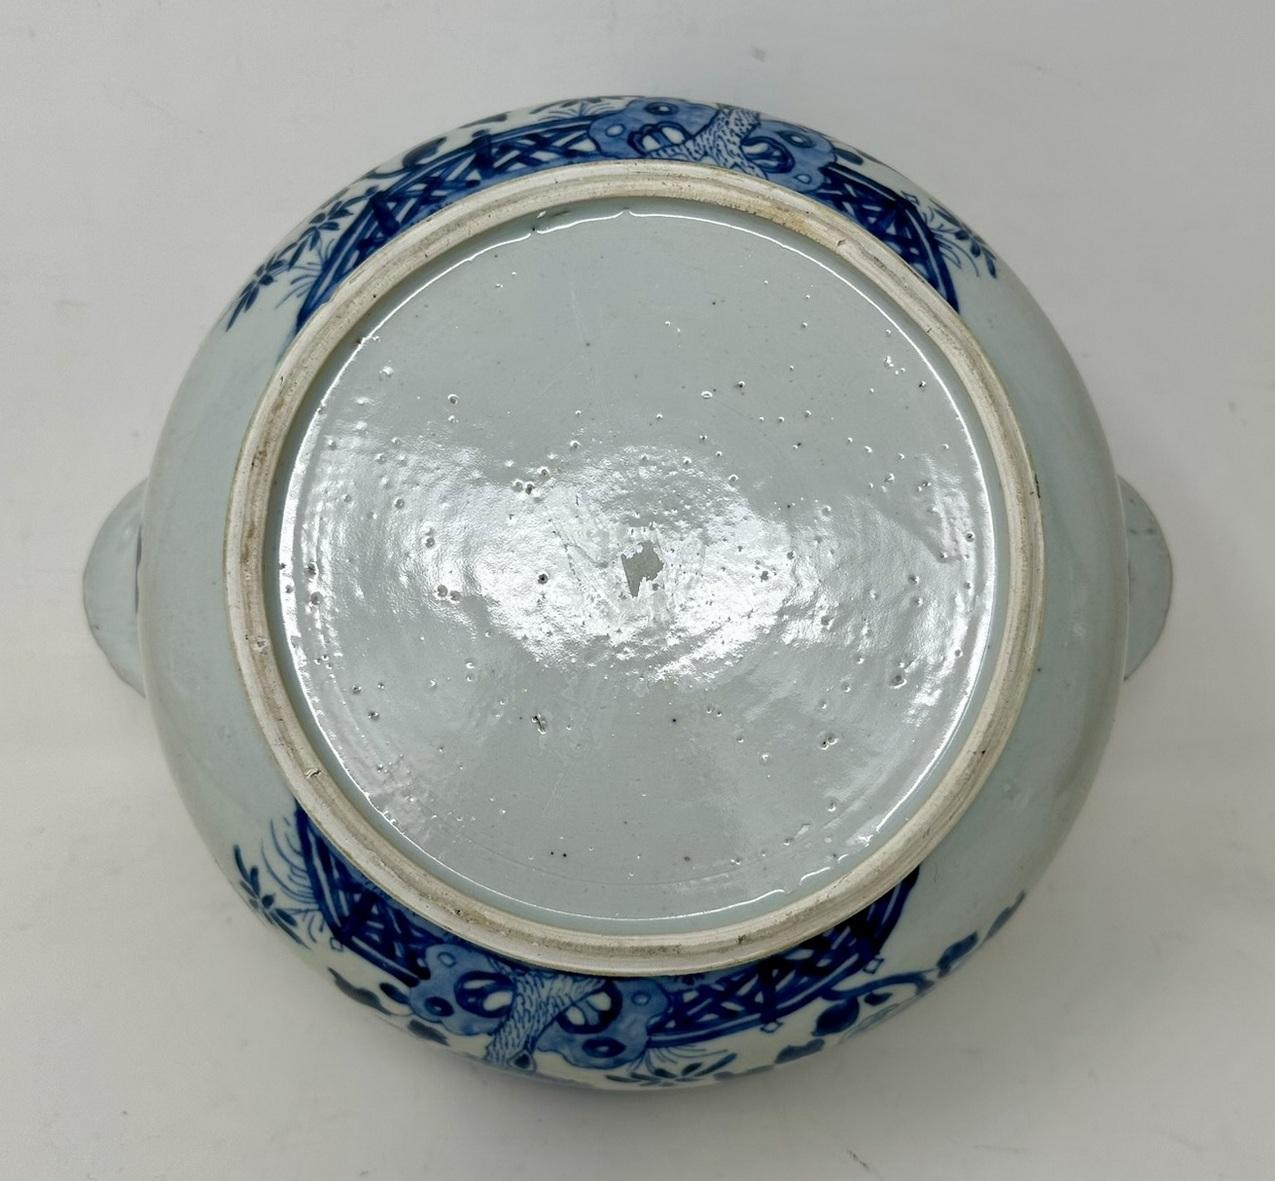 Antique Chinese Export Porcelain Blue White Chien Lung Soup Tureen Centerpiece For Sale 2